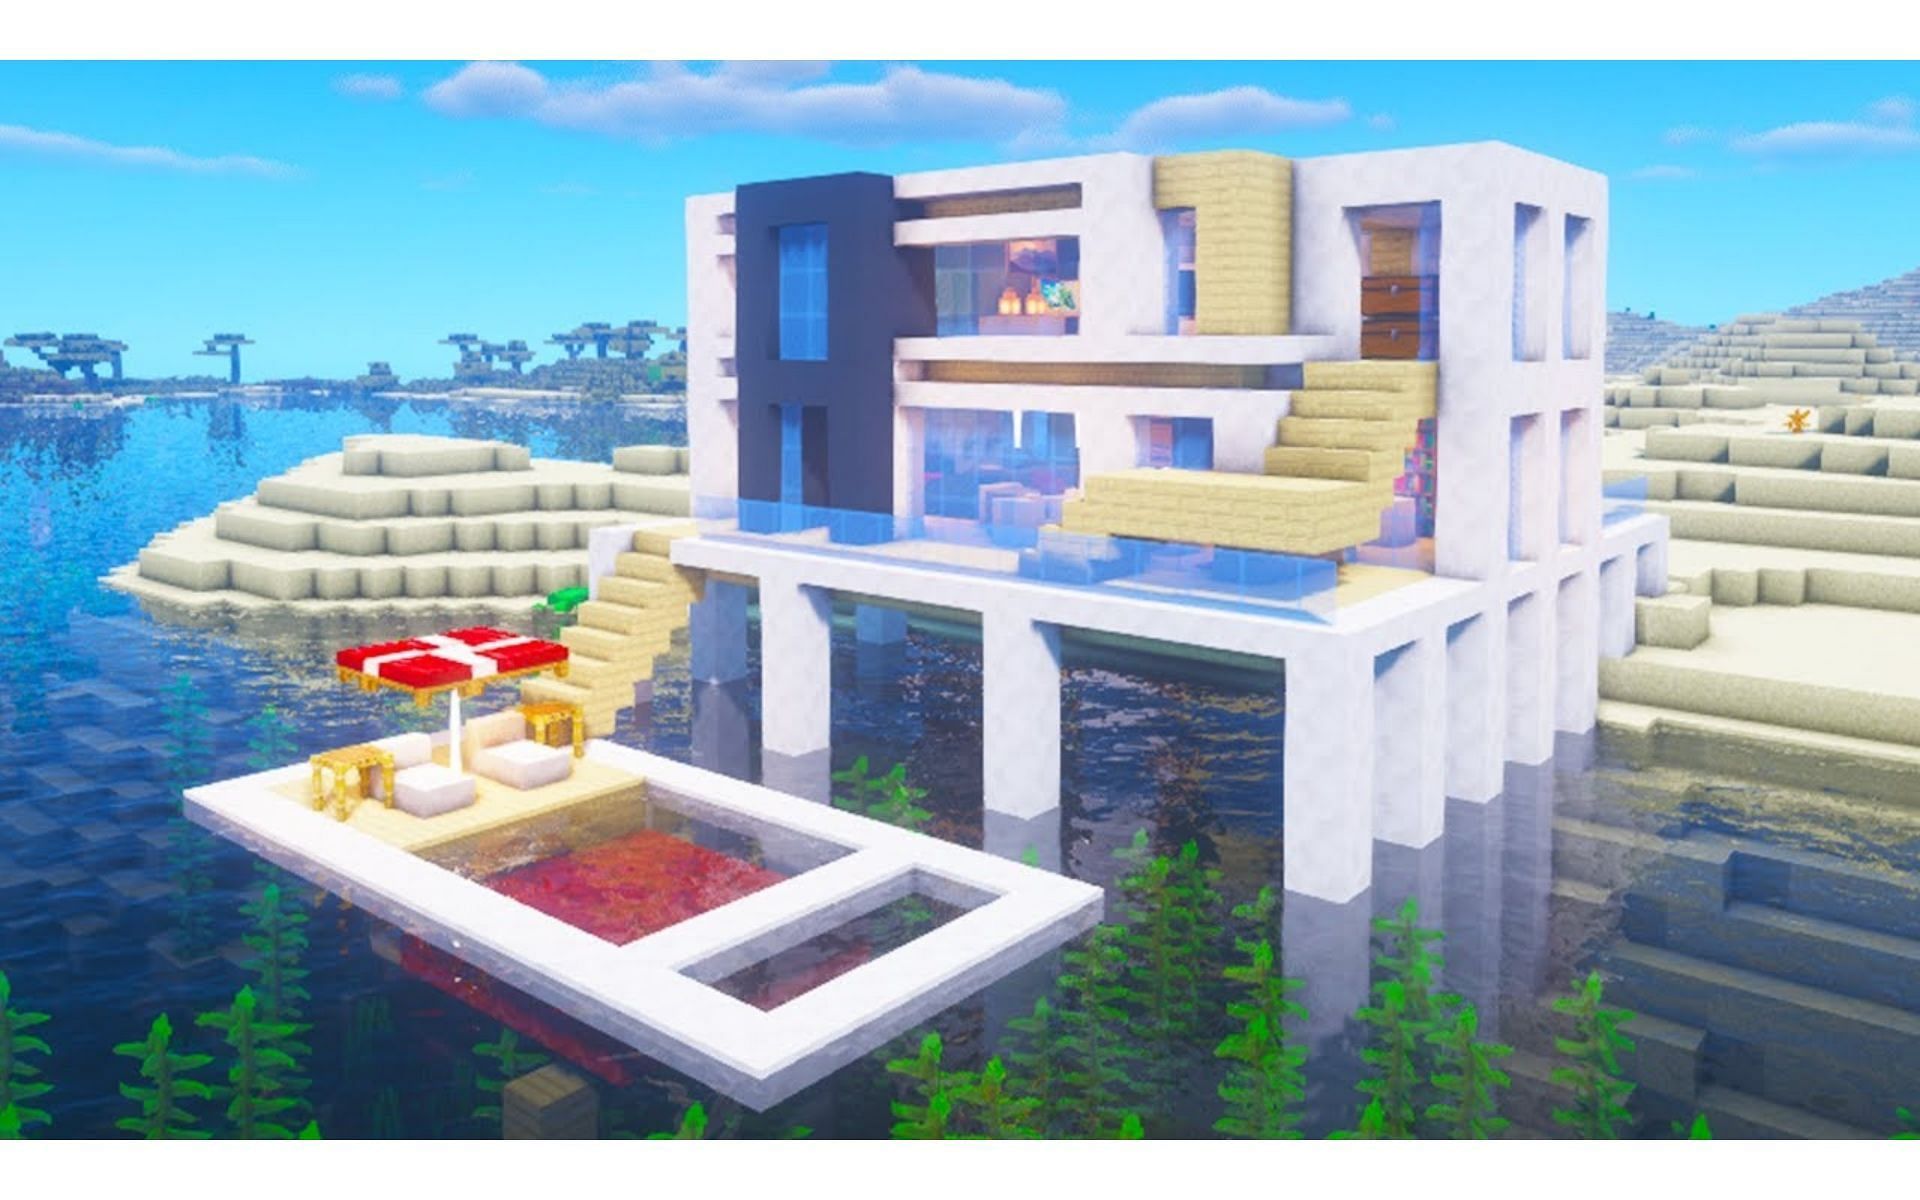 A modern beach house can look refreshing after a hot beach day. (Image via YouTube/TSMC Minecraft)